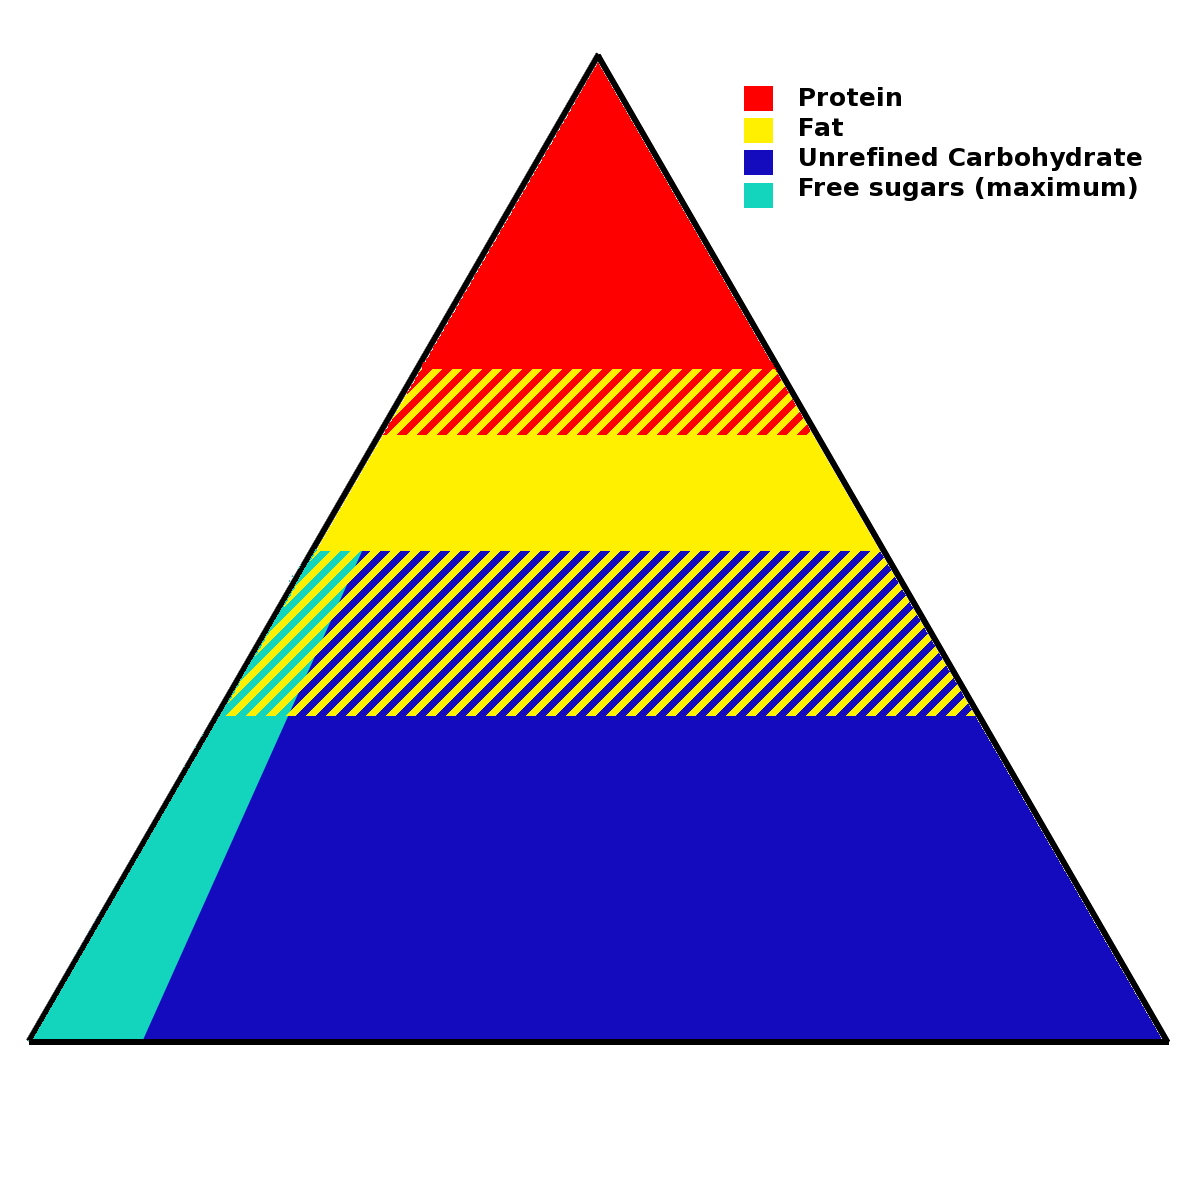 Food pyramid (nutrition) - Wikipedia, the free encyclopedia